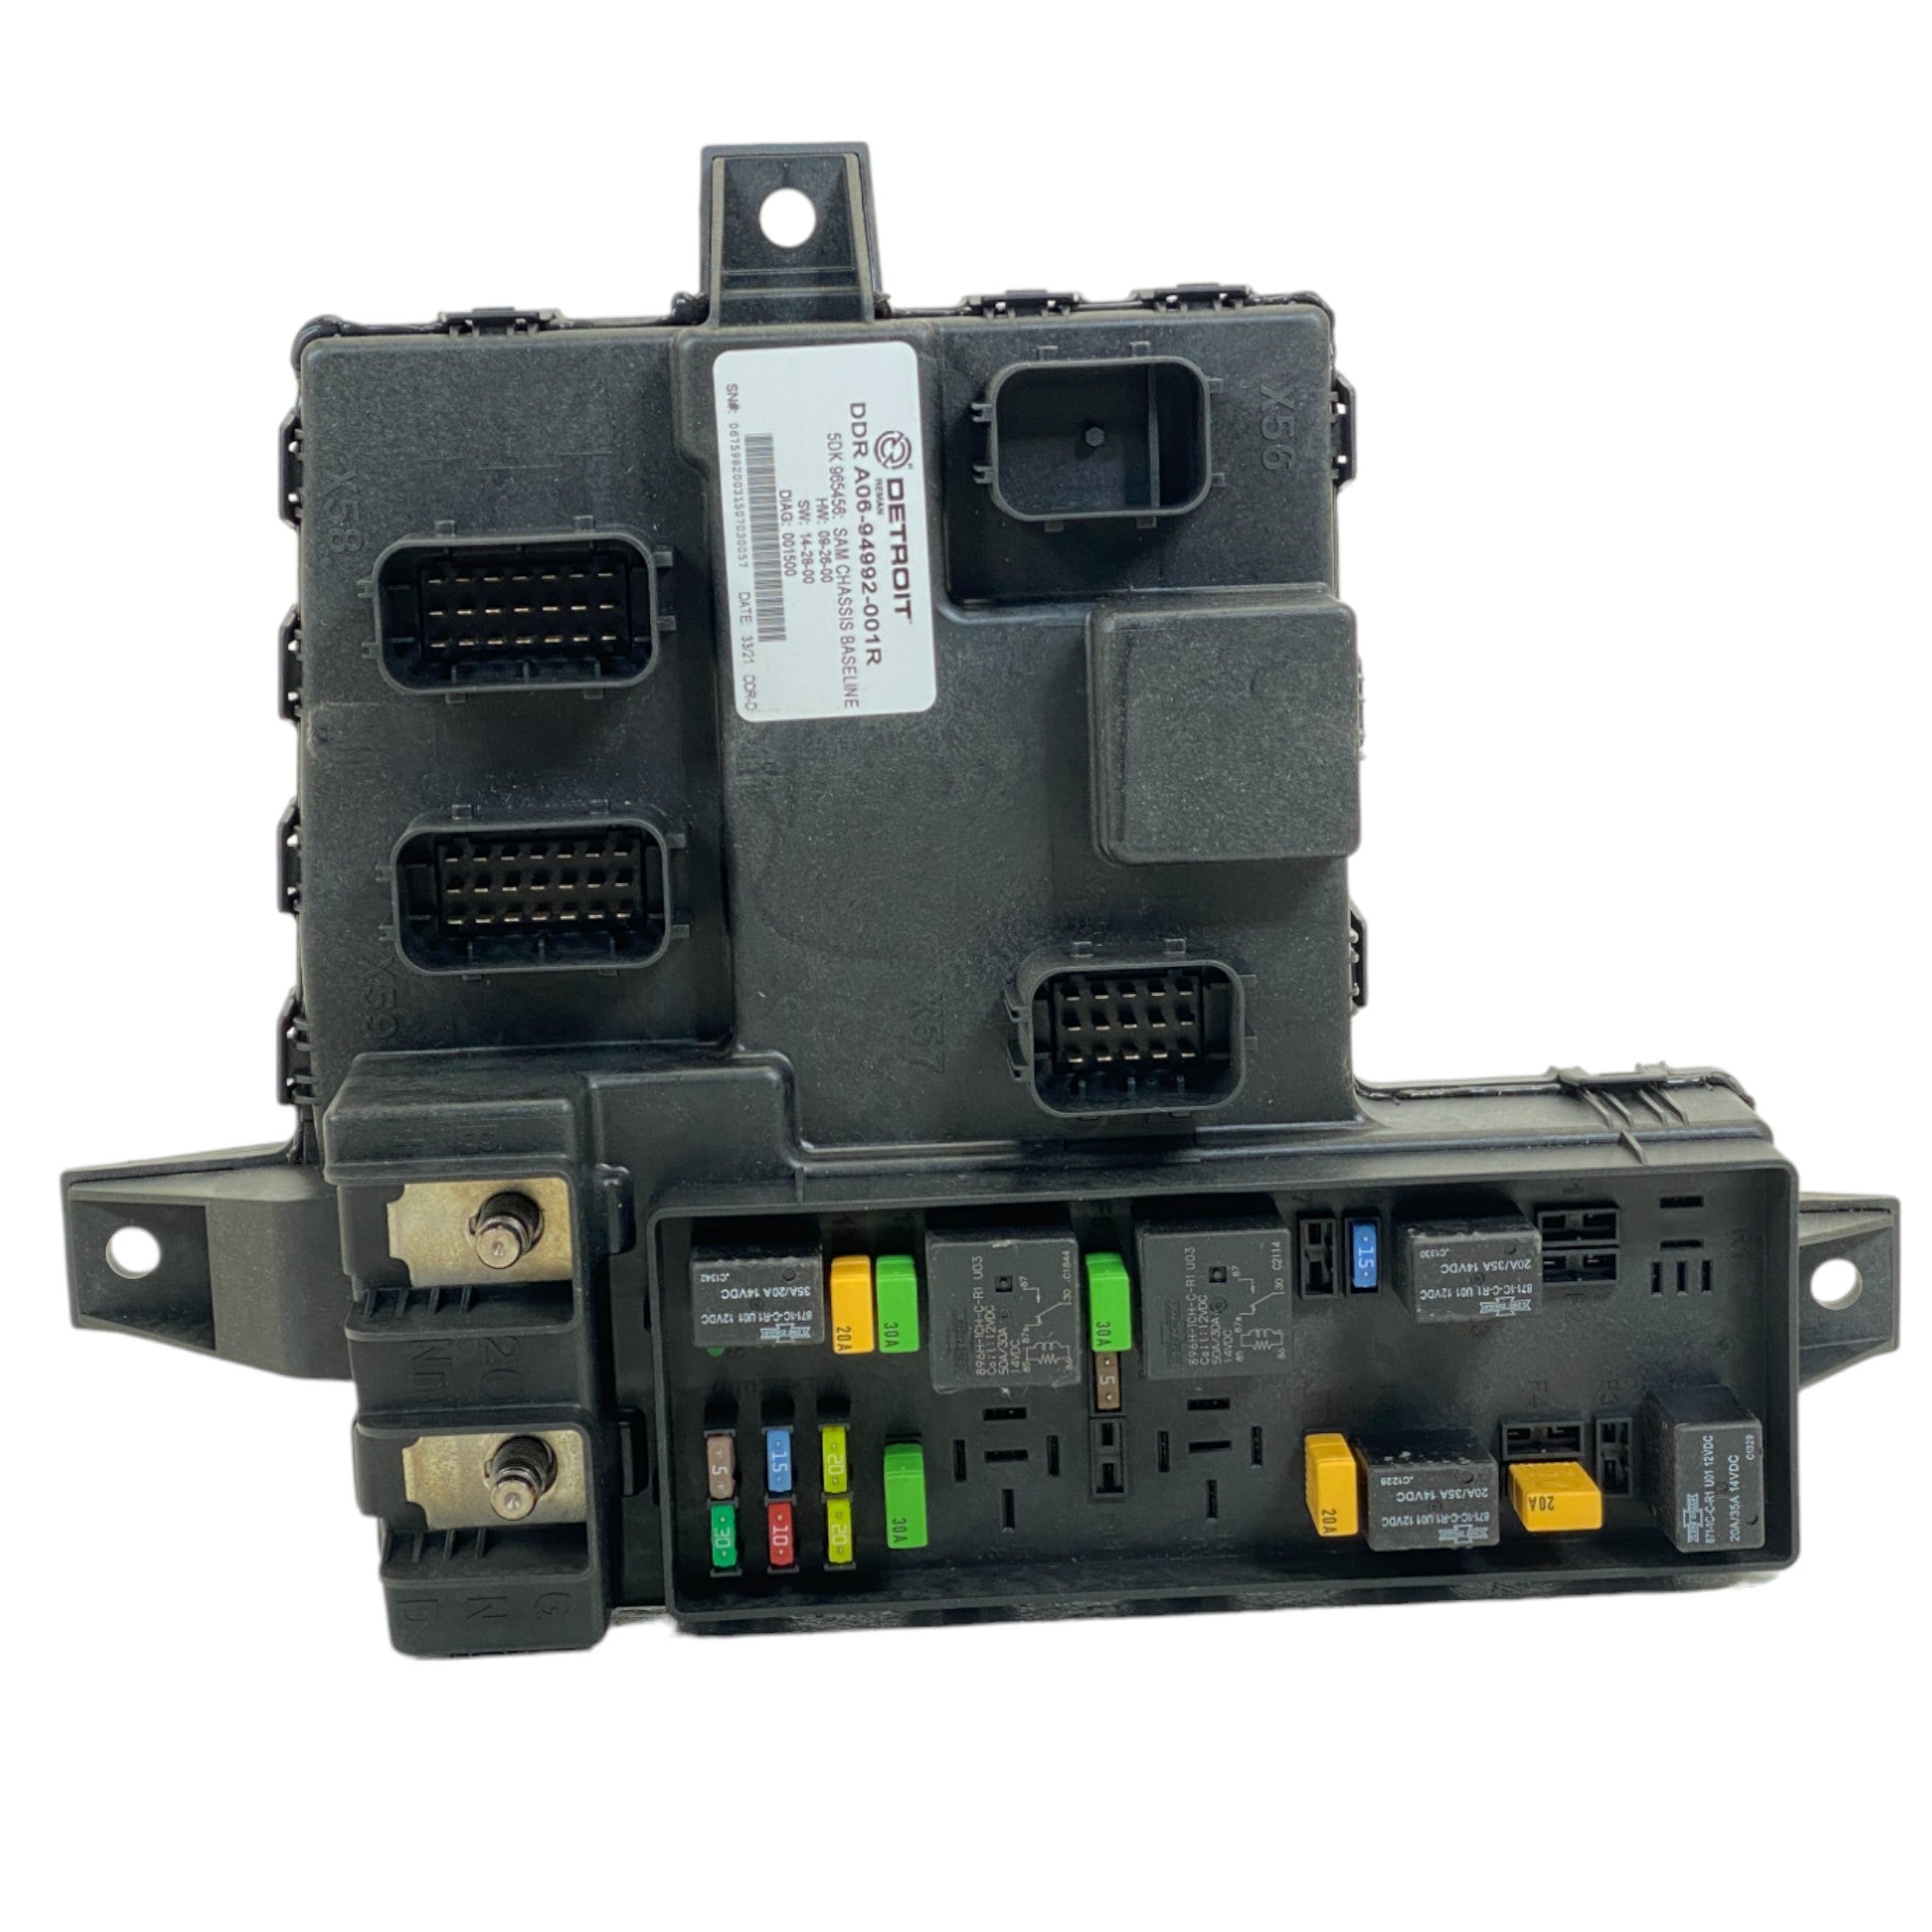 A06-94992-001 Genuine Detroit Diesel Interface Multiplexing Control Module